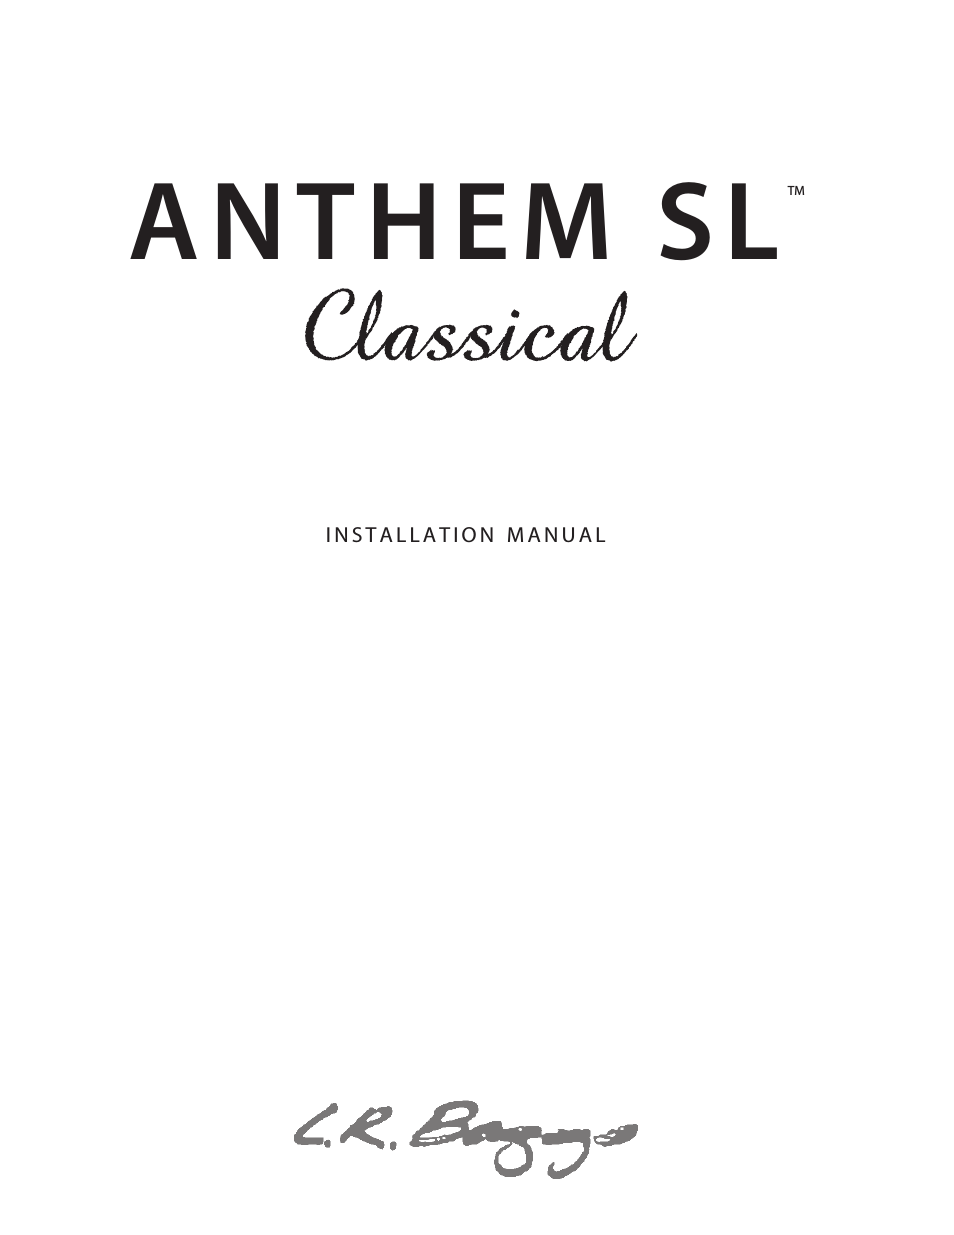 Anthem SL Classical